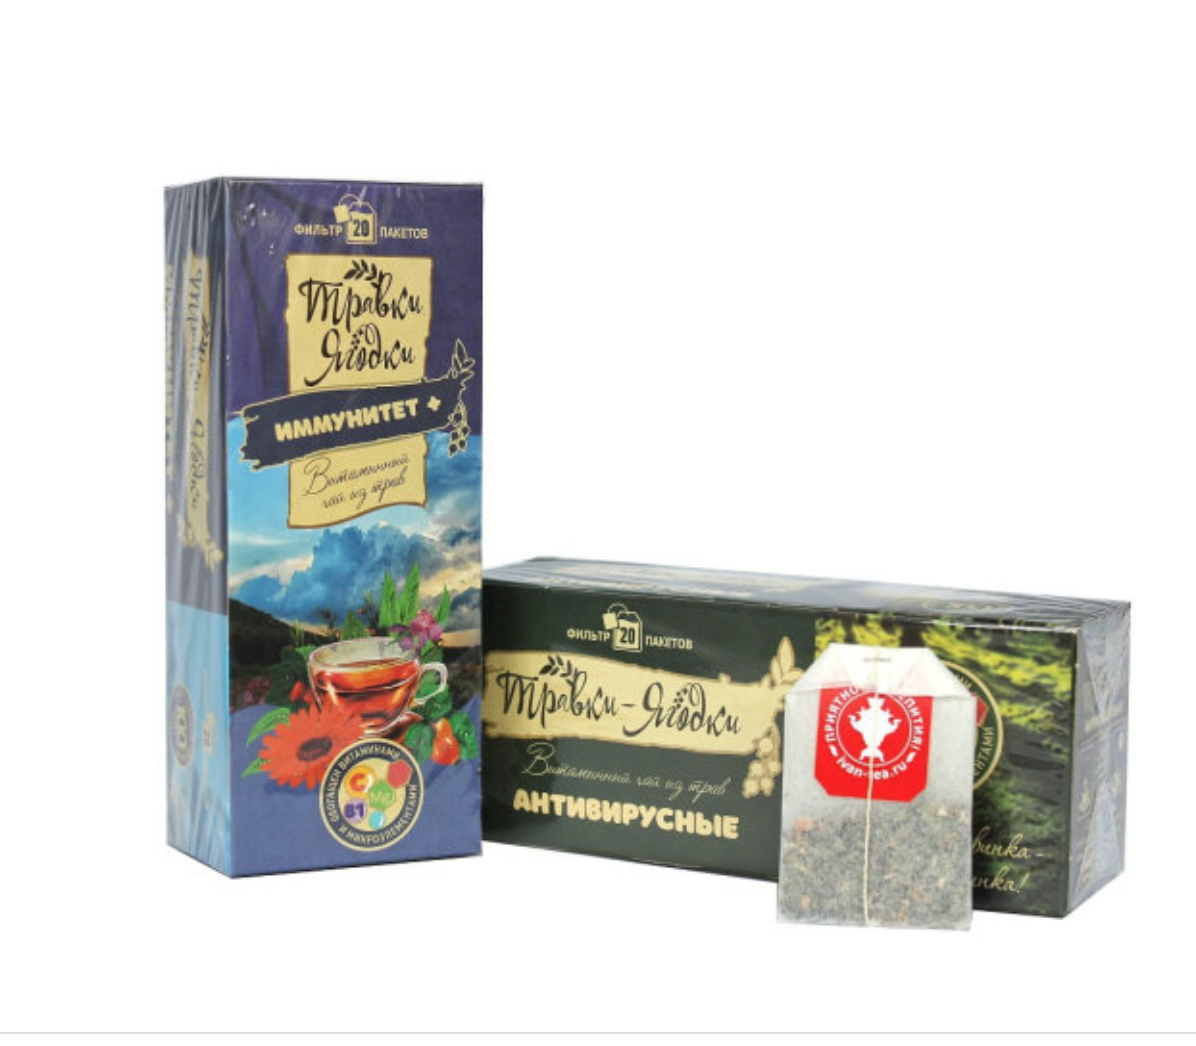 Natural Vitamin Herbal Tea, Immunity+, Travki-Yagodki, 20 bags x 1.5 g